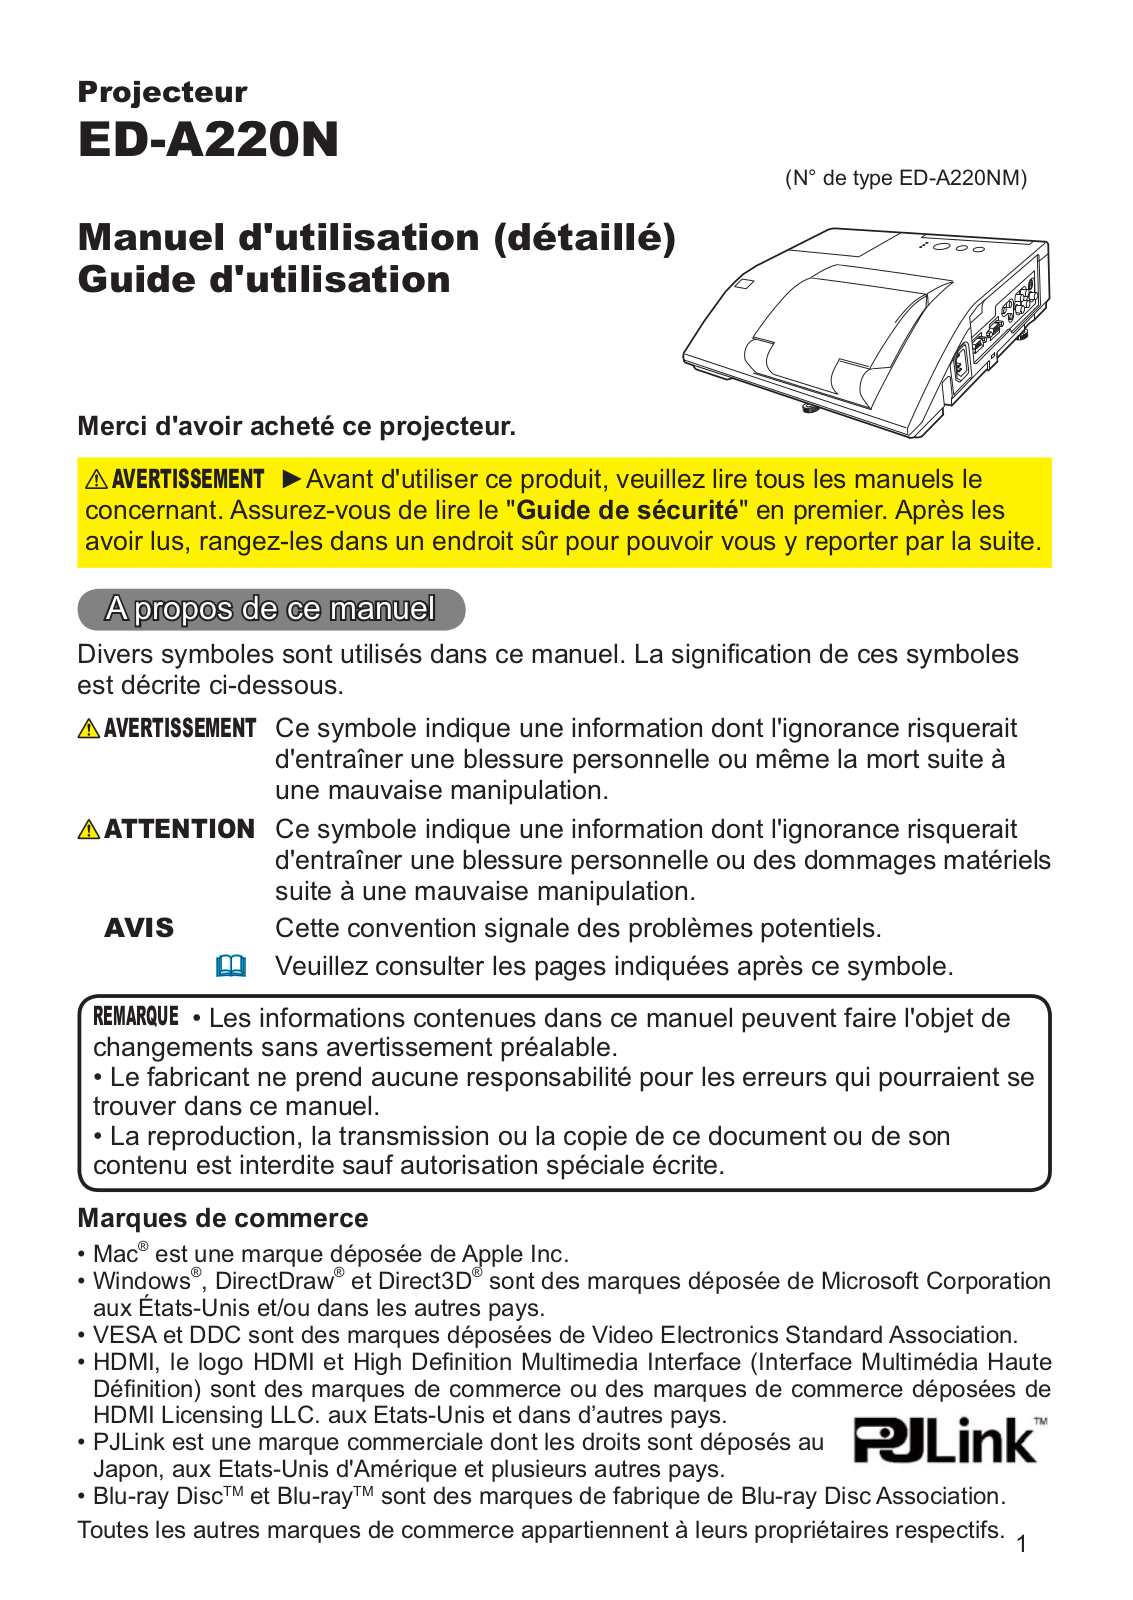 HITACHI ED-A220NM User Manual